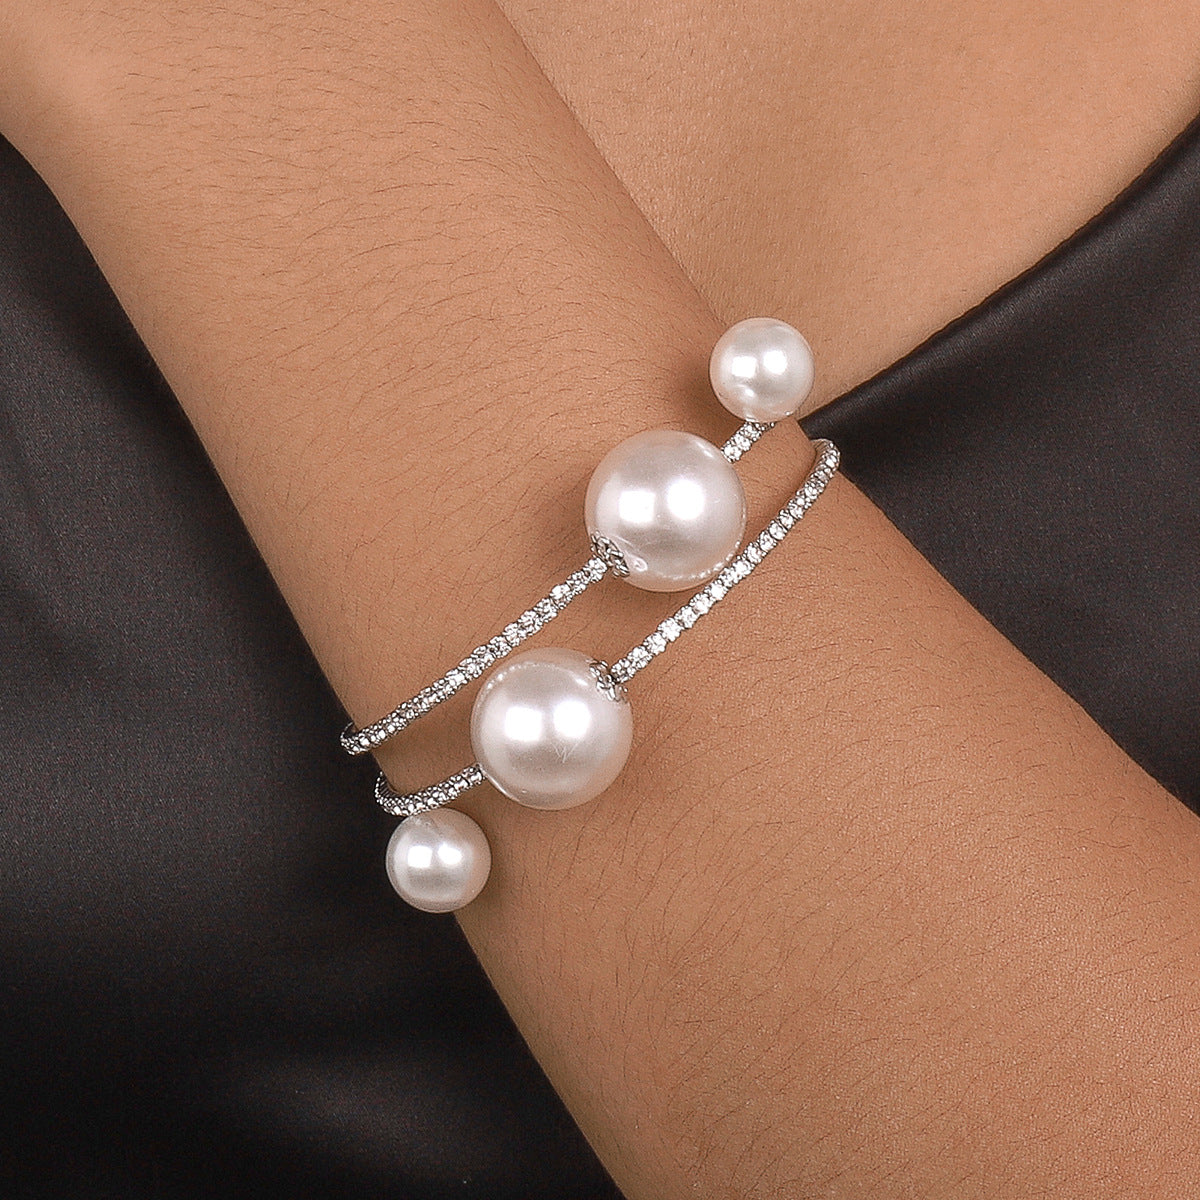 Pearl & Cubic Zirconia Silver-Plated Wrap Bracelet